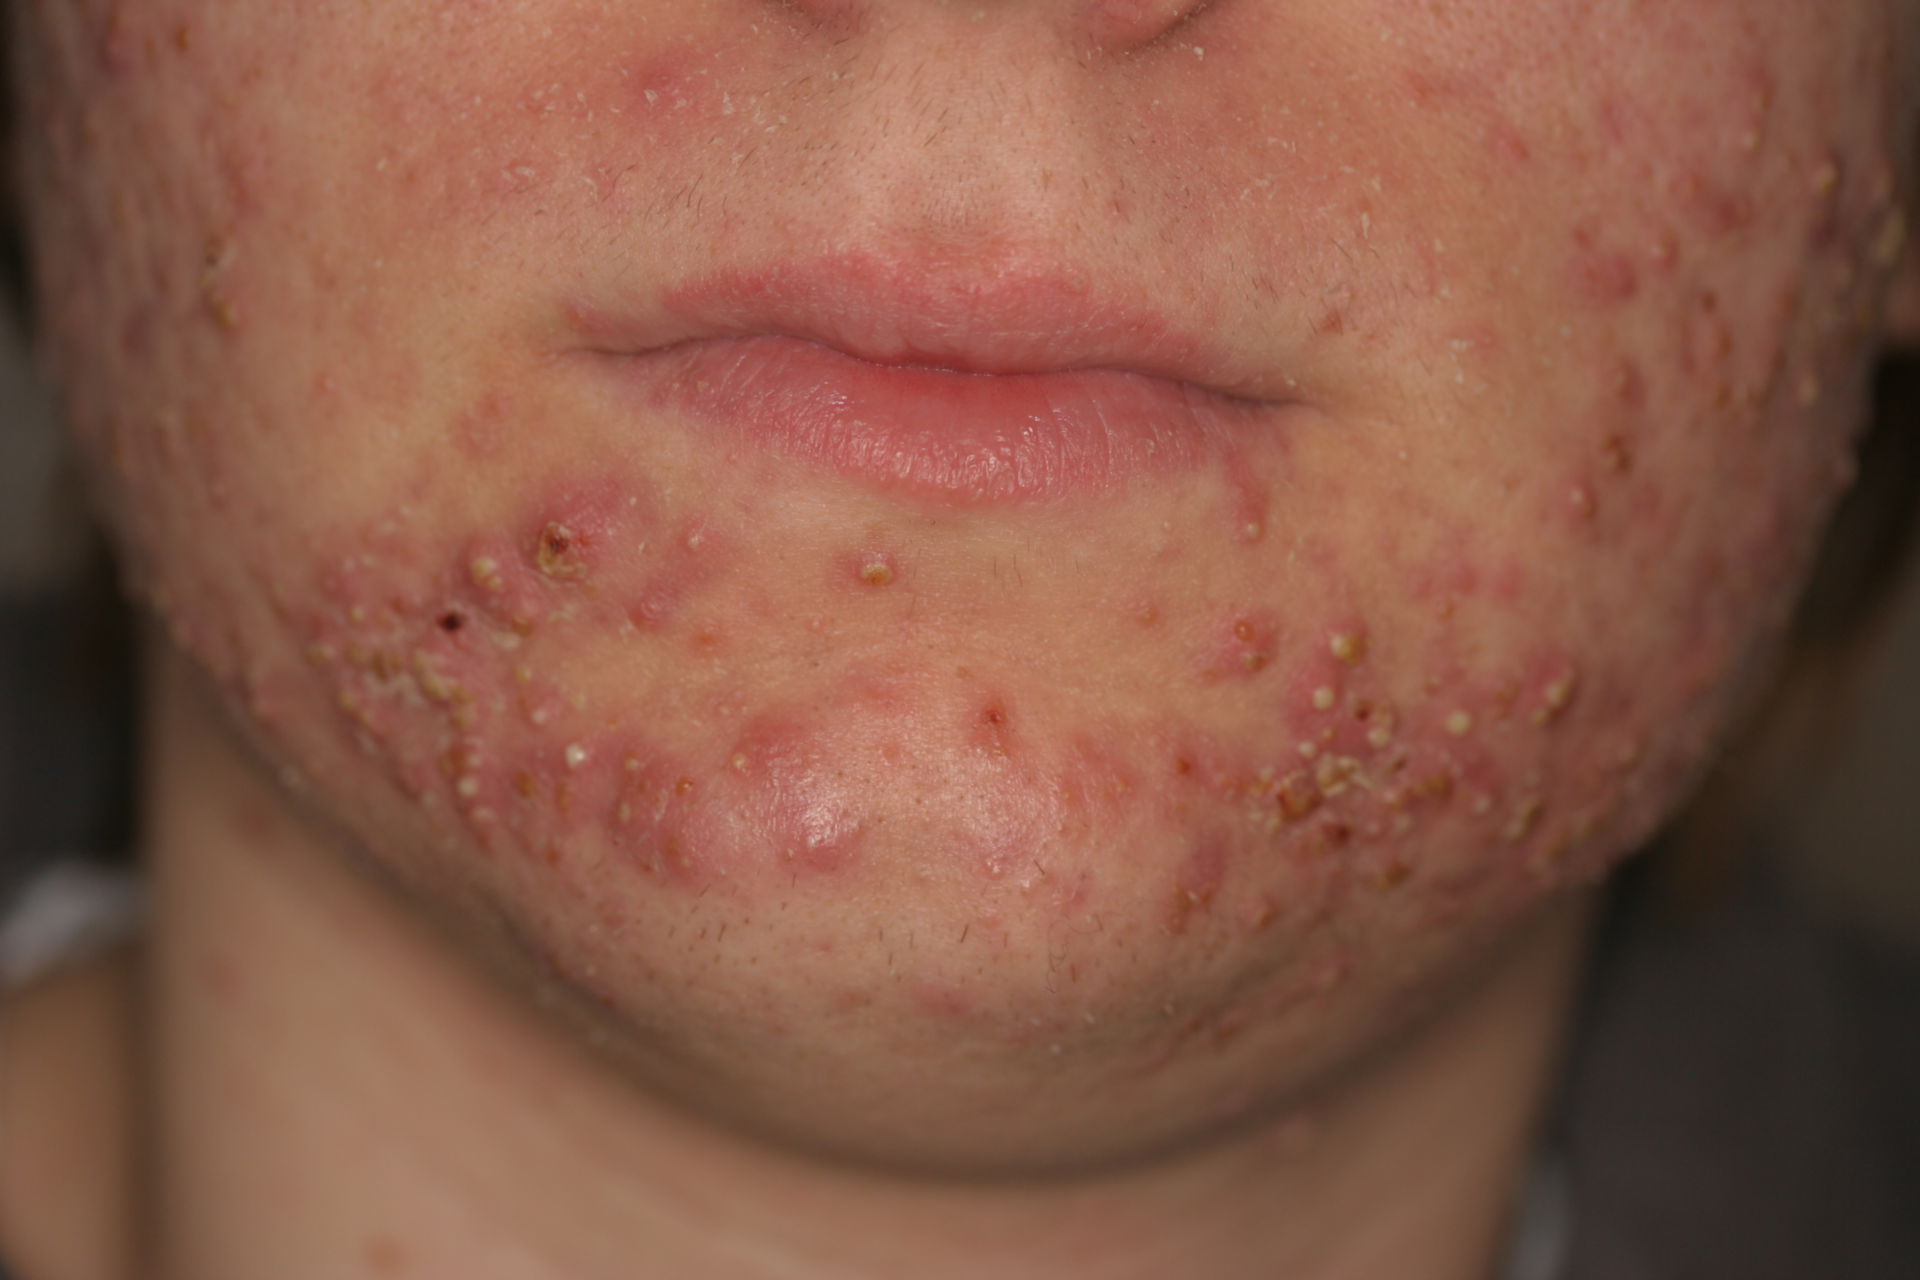 Papular and pustular acne